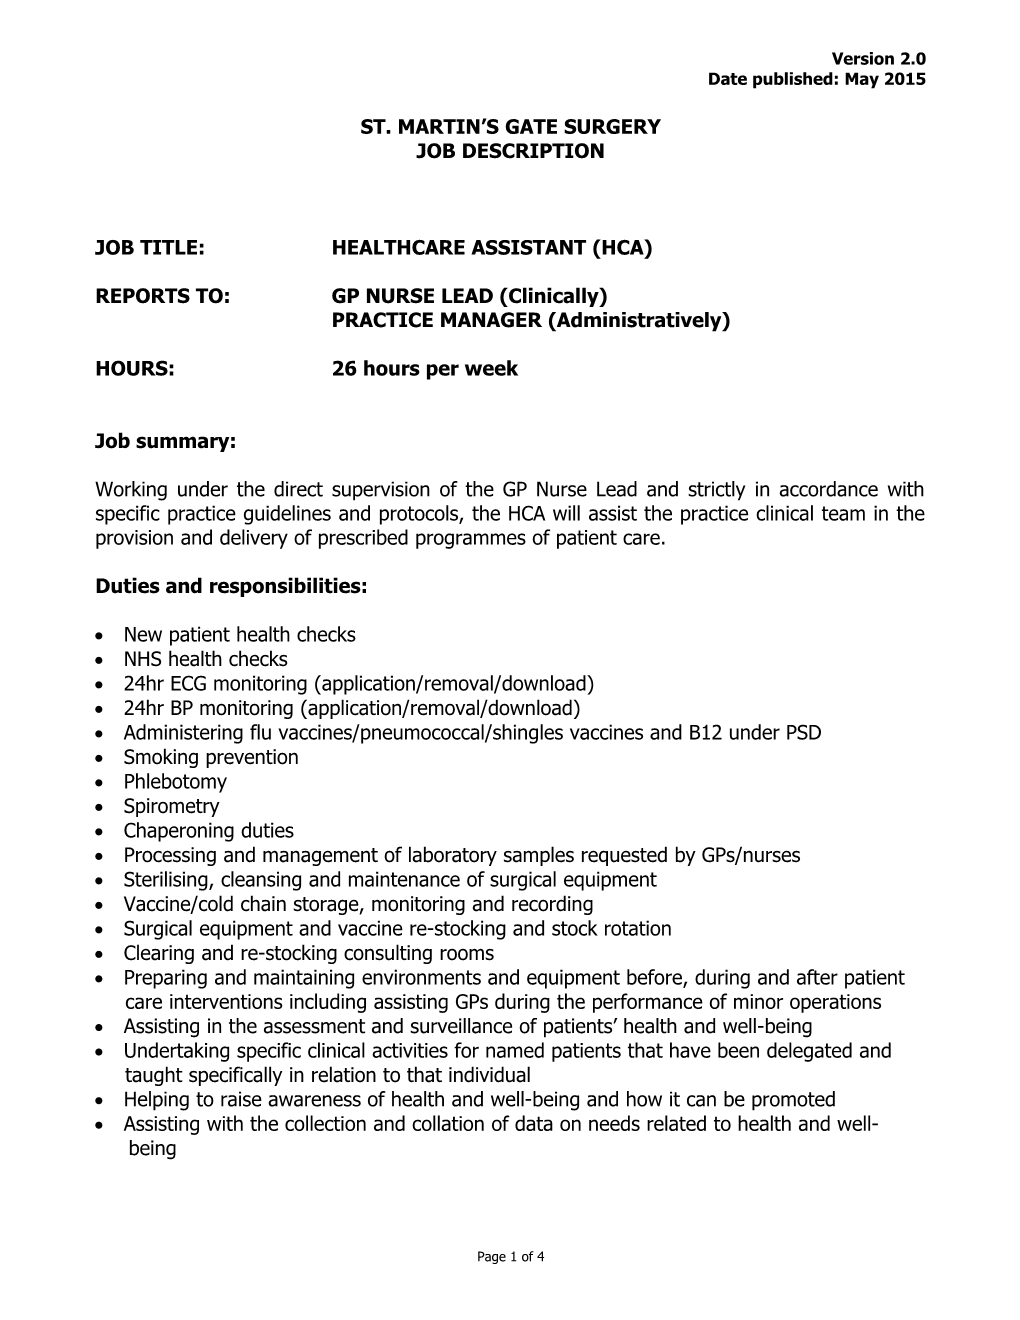 Job Title: Healthcare Assistant (Hca)